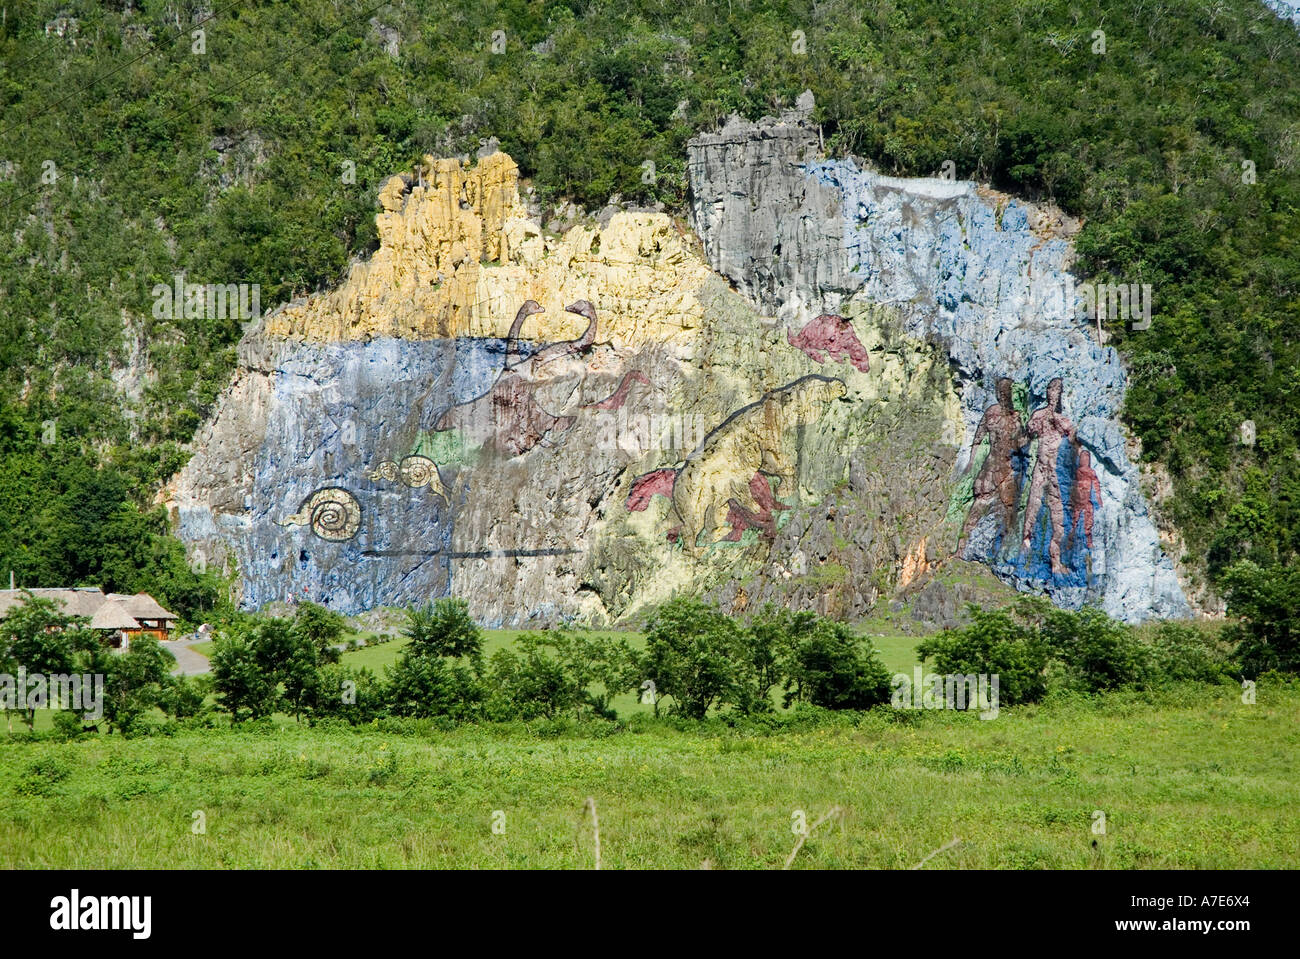 Mural de la Prehistoria fresco in the Vinales Valley, Cuba. Stock Photo